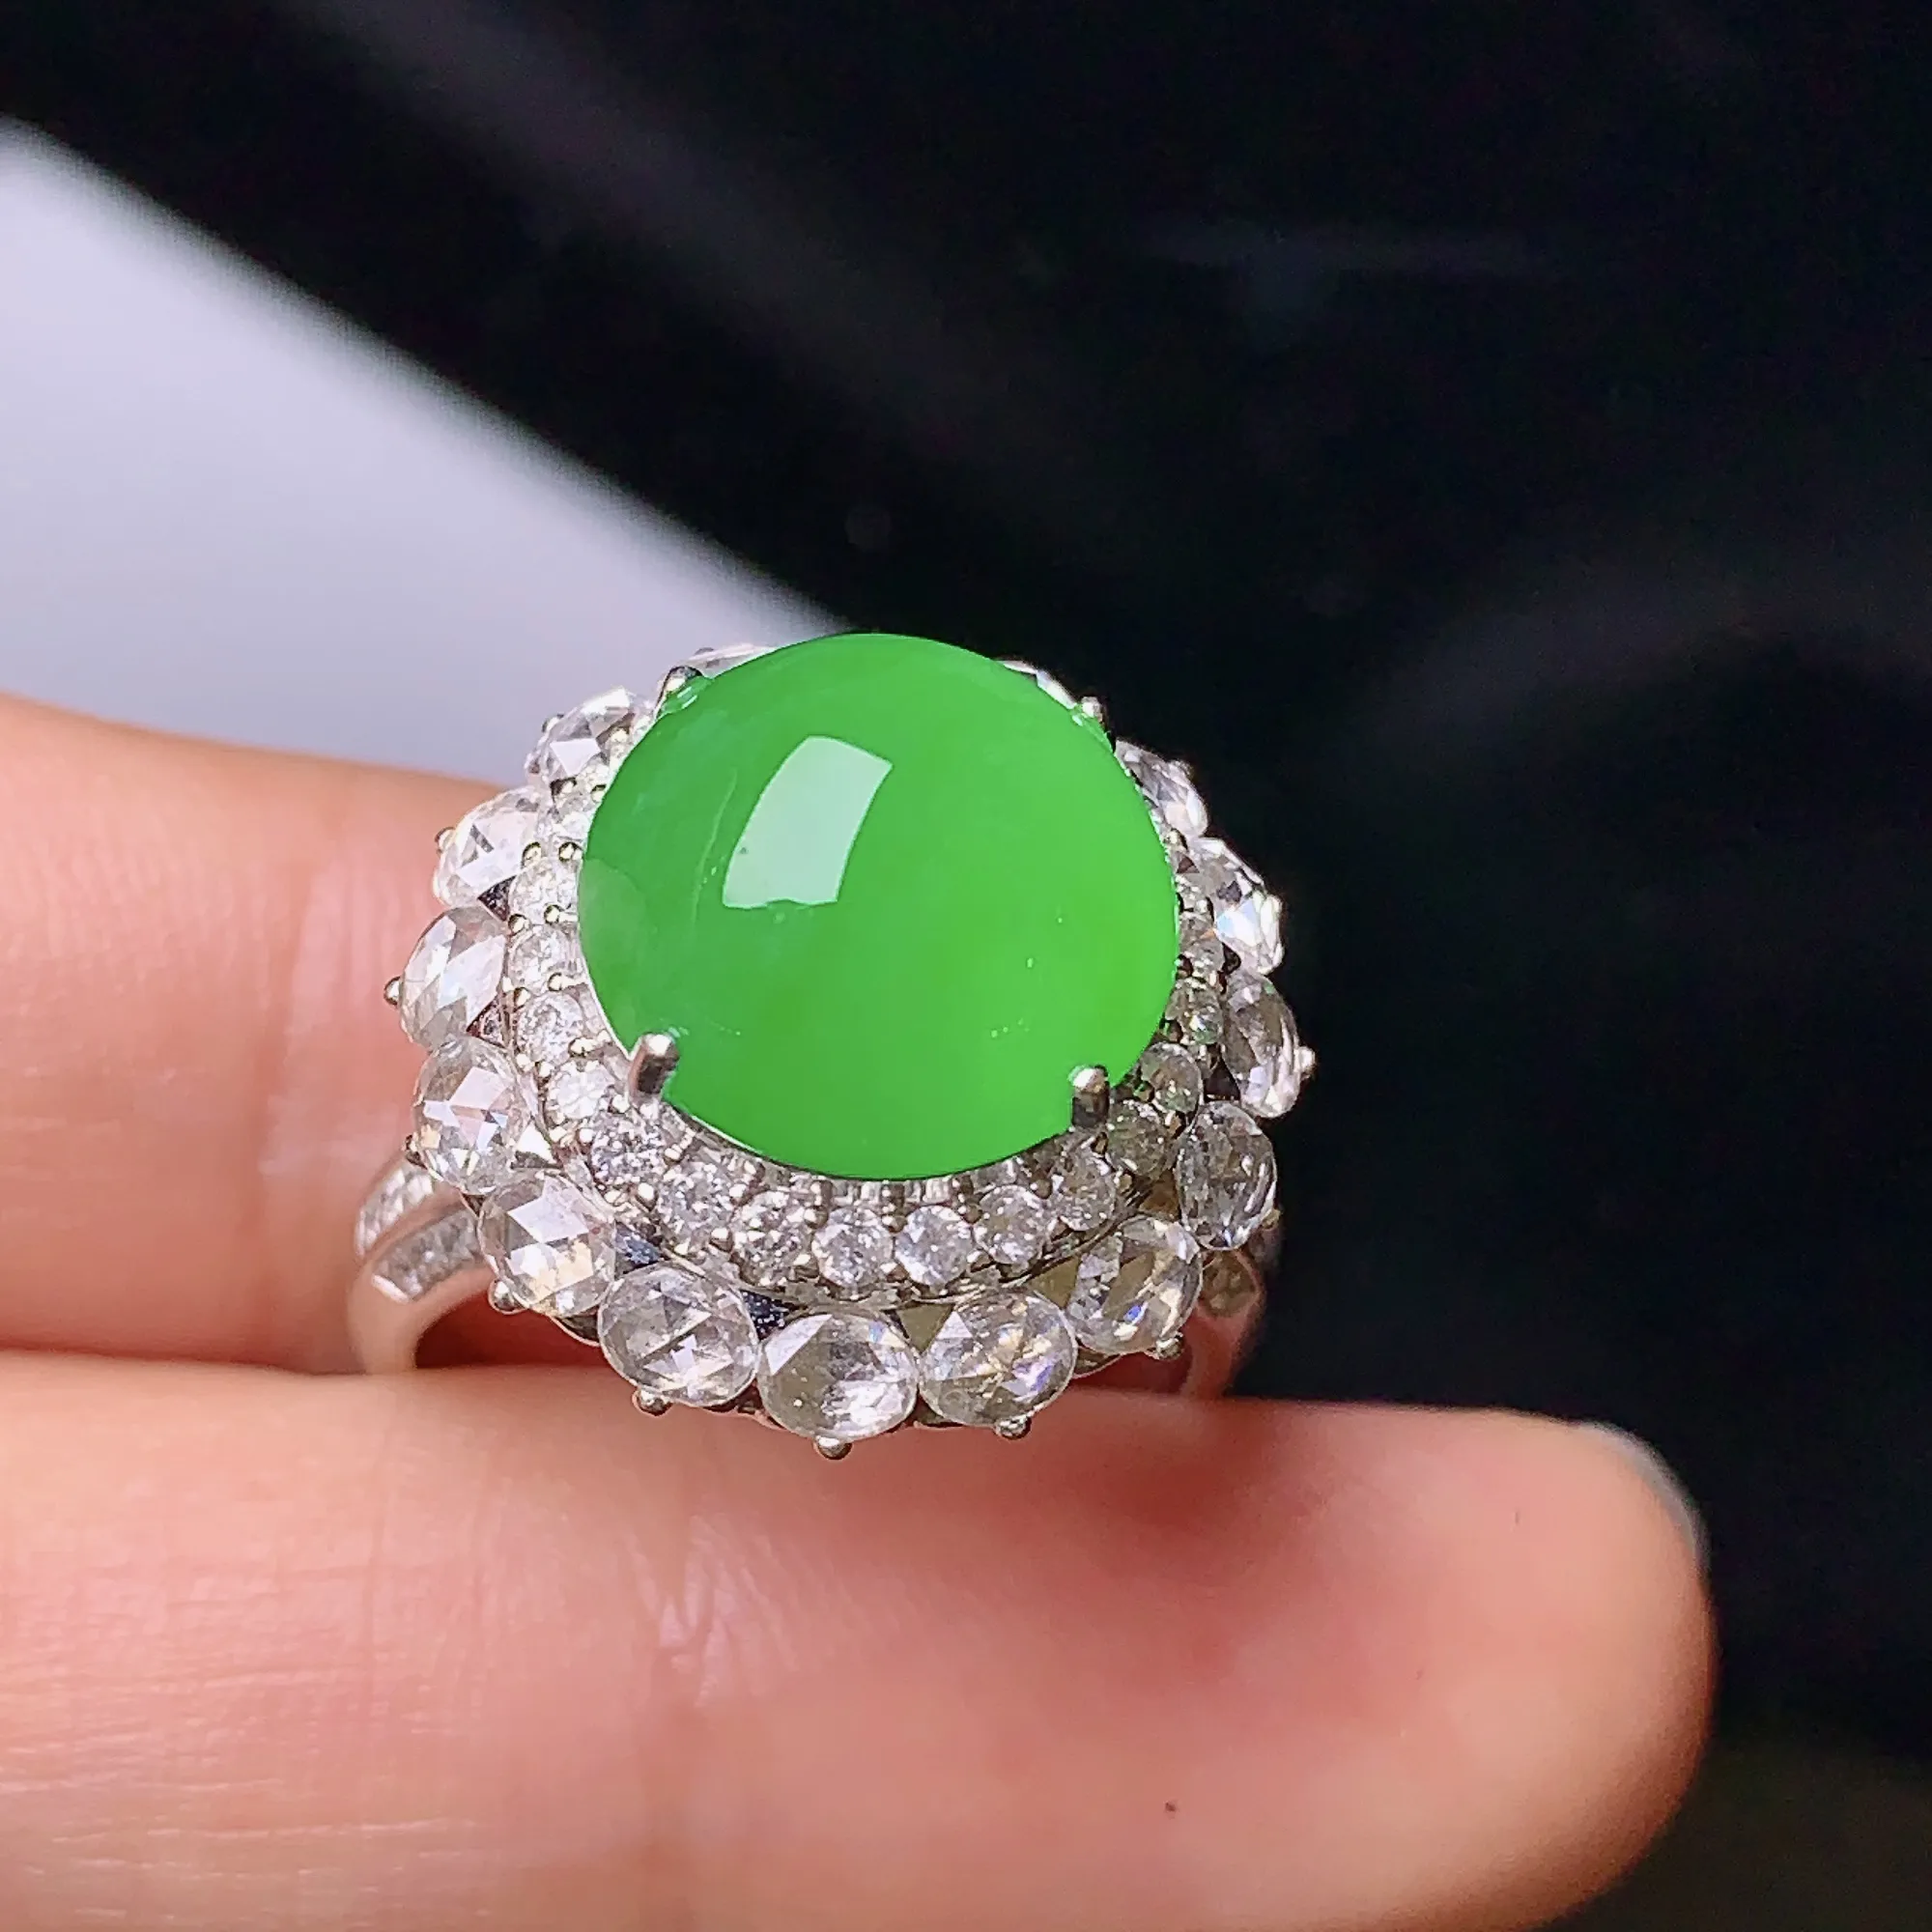 18k金钻镶嵌满绿蛋面戒指 玉质细腻 色泽艳丽 款式新颖时尚唯美 圈口14 整体尺寸18.3*14.